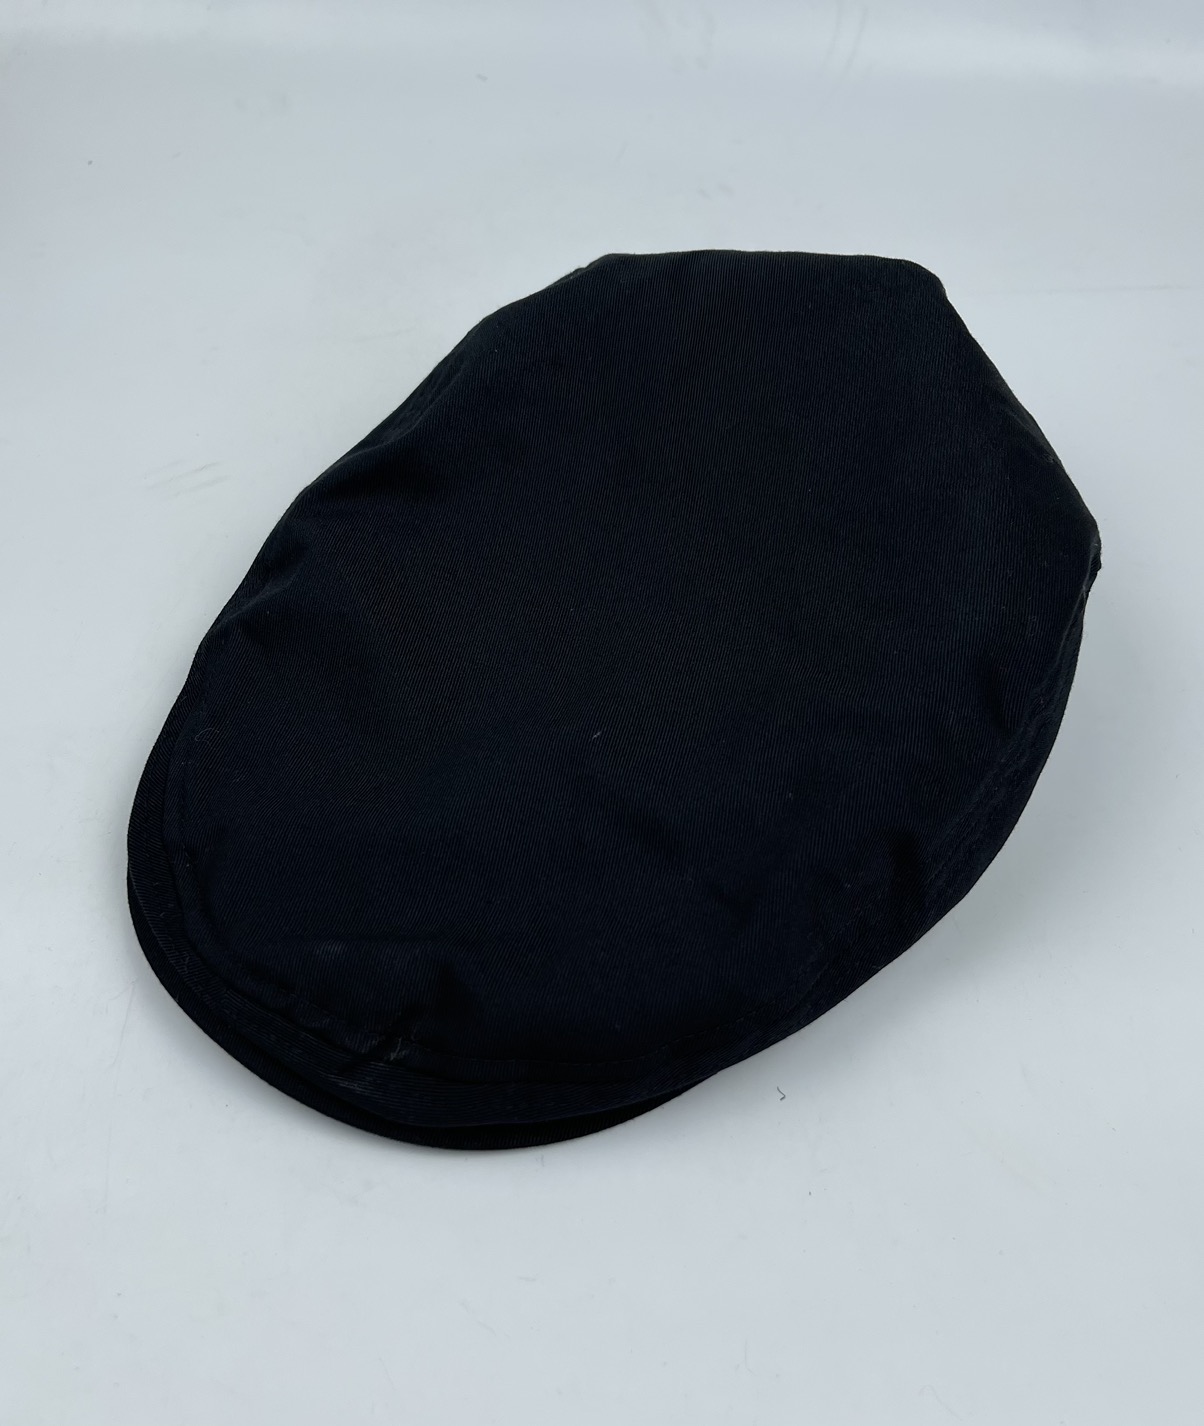 montblanc hat - 2